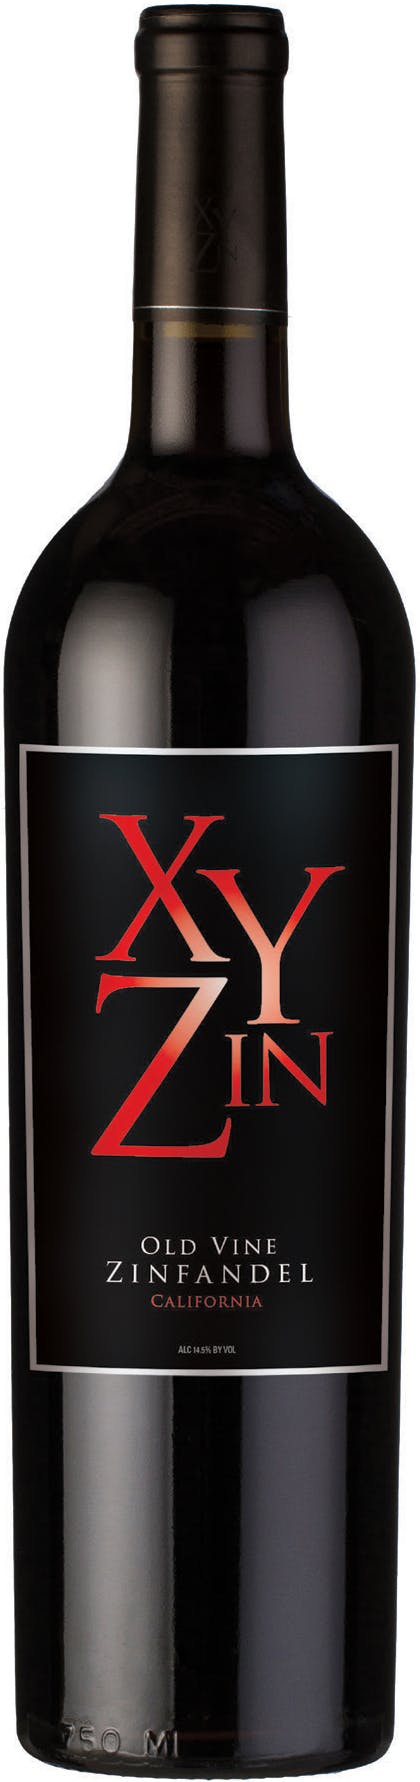 XYZin Old Vine Zinfandel 2017 750ml - Yankee Spirits